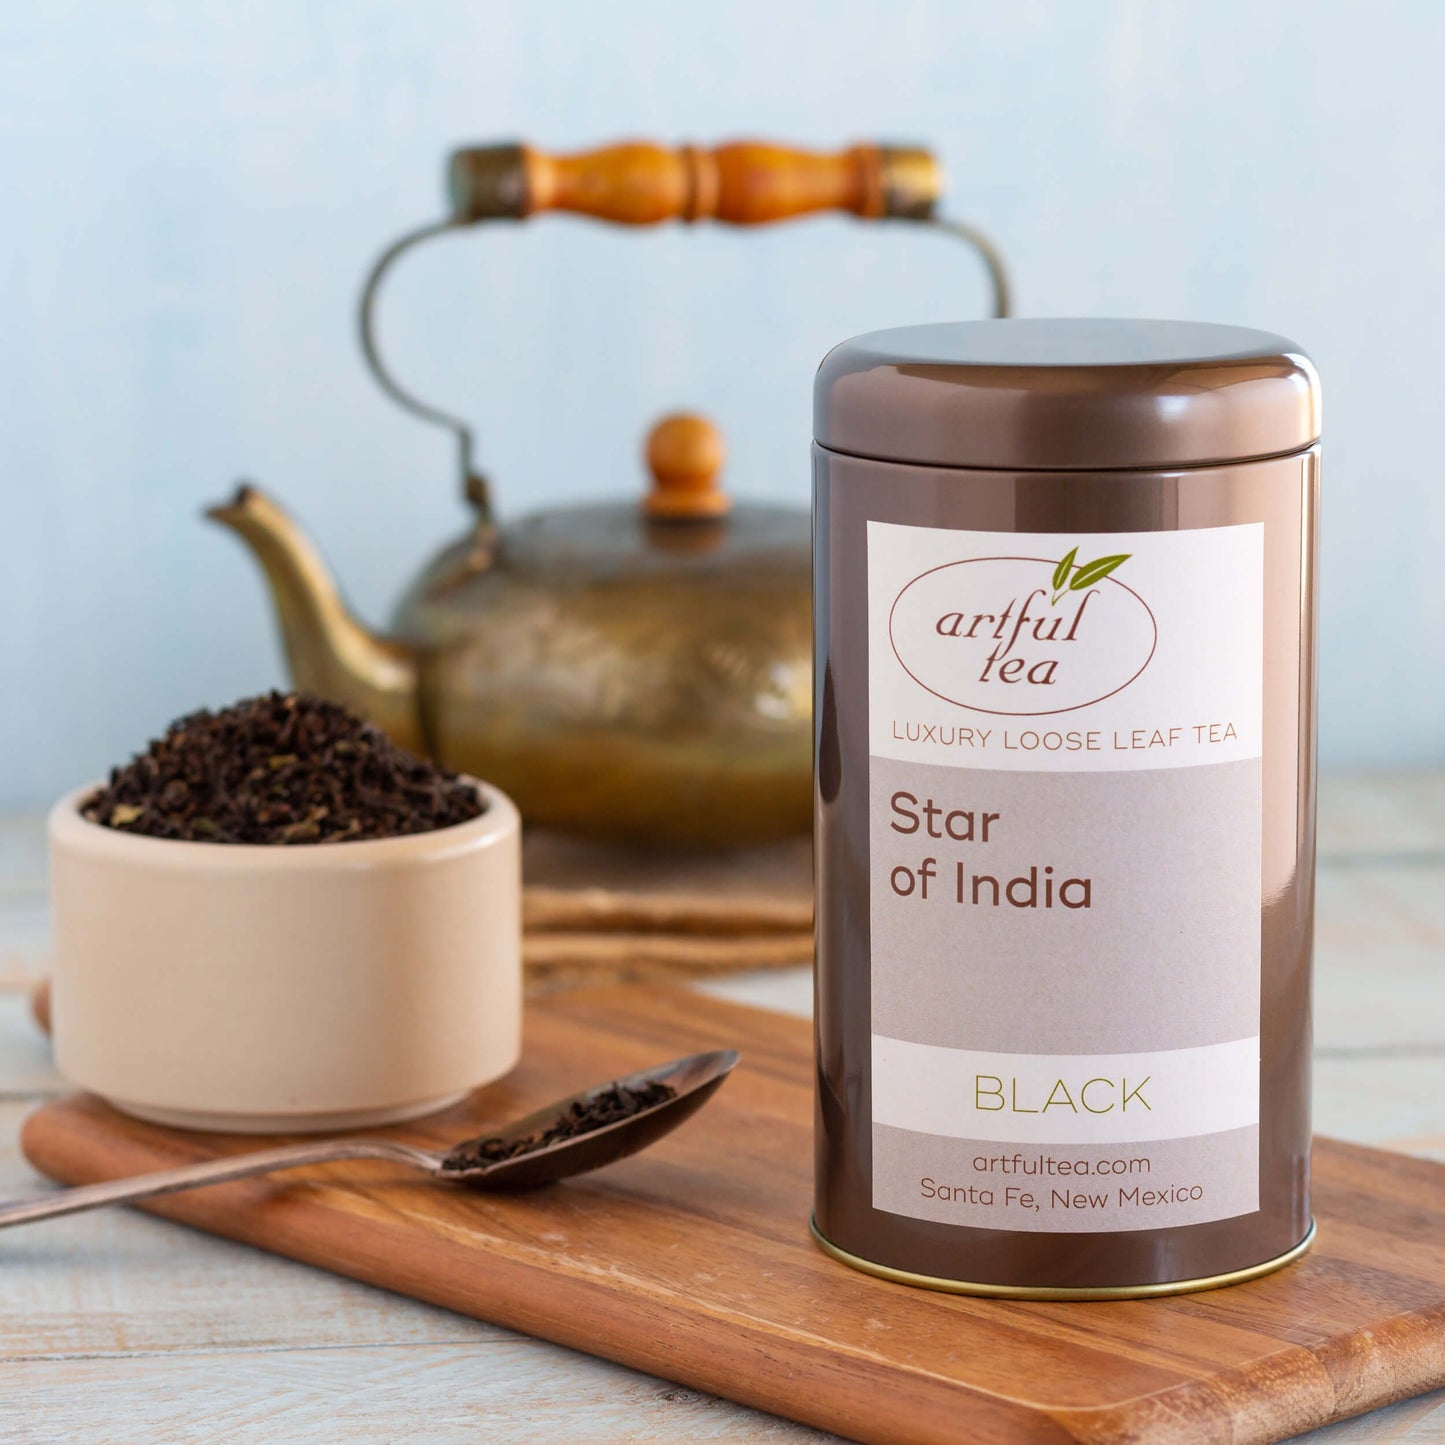 Star of India Black Tea